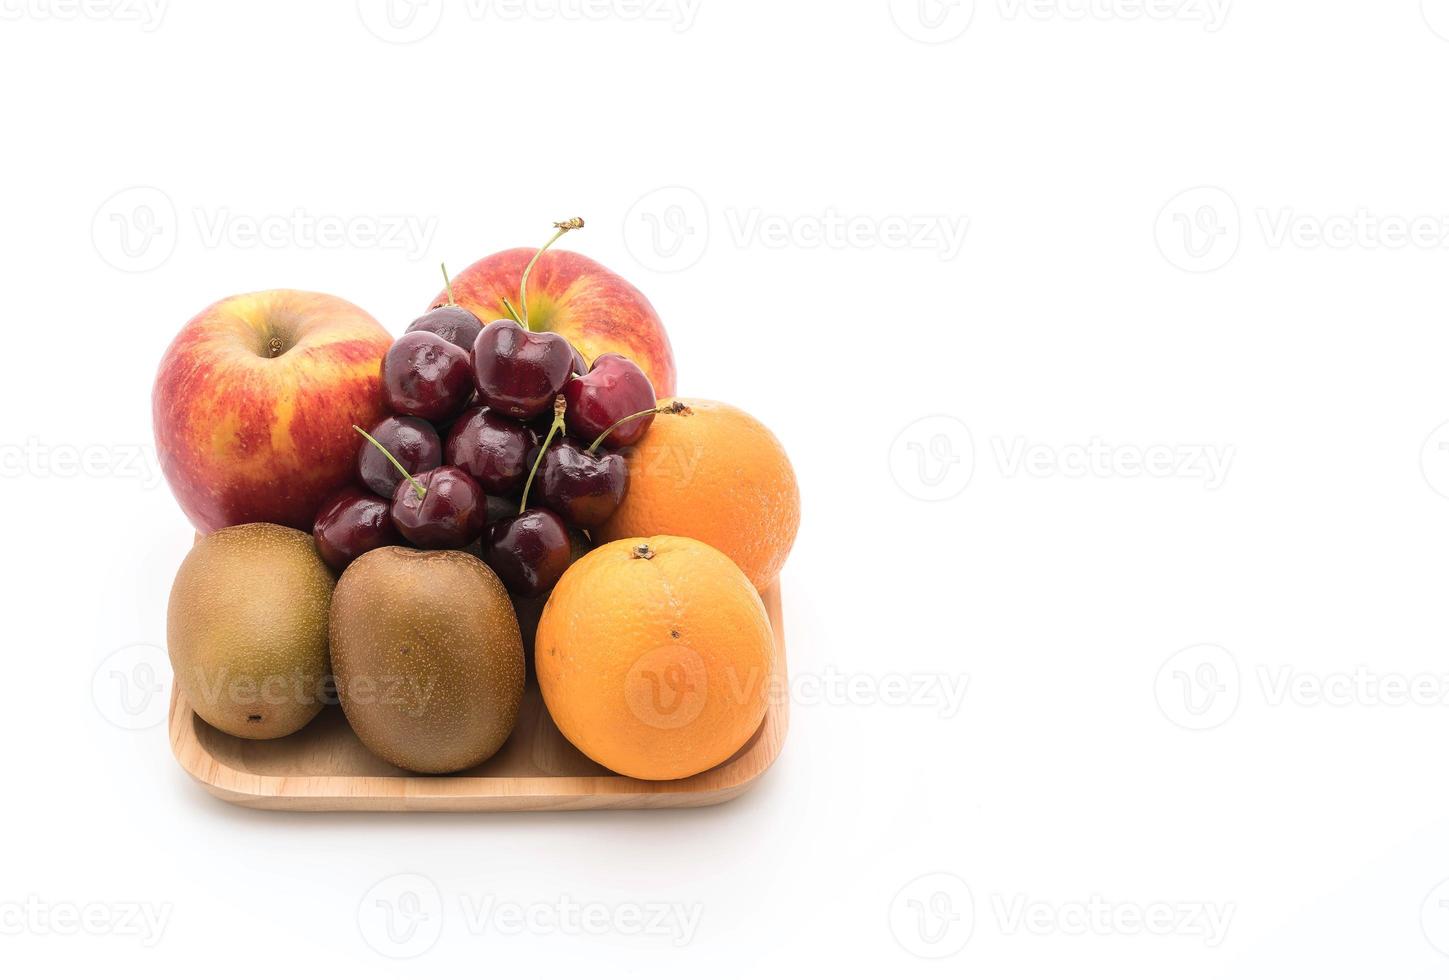 gemengd fruit in houten plaat op witte achtergrond foto